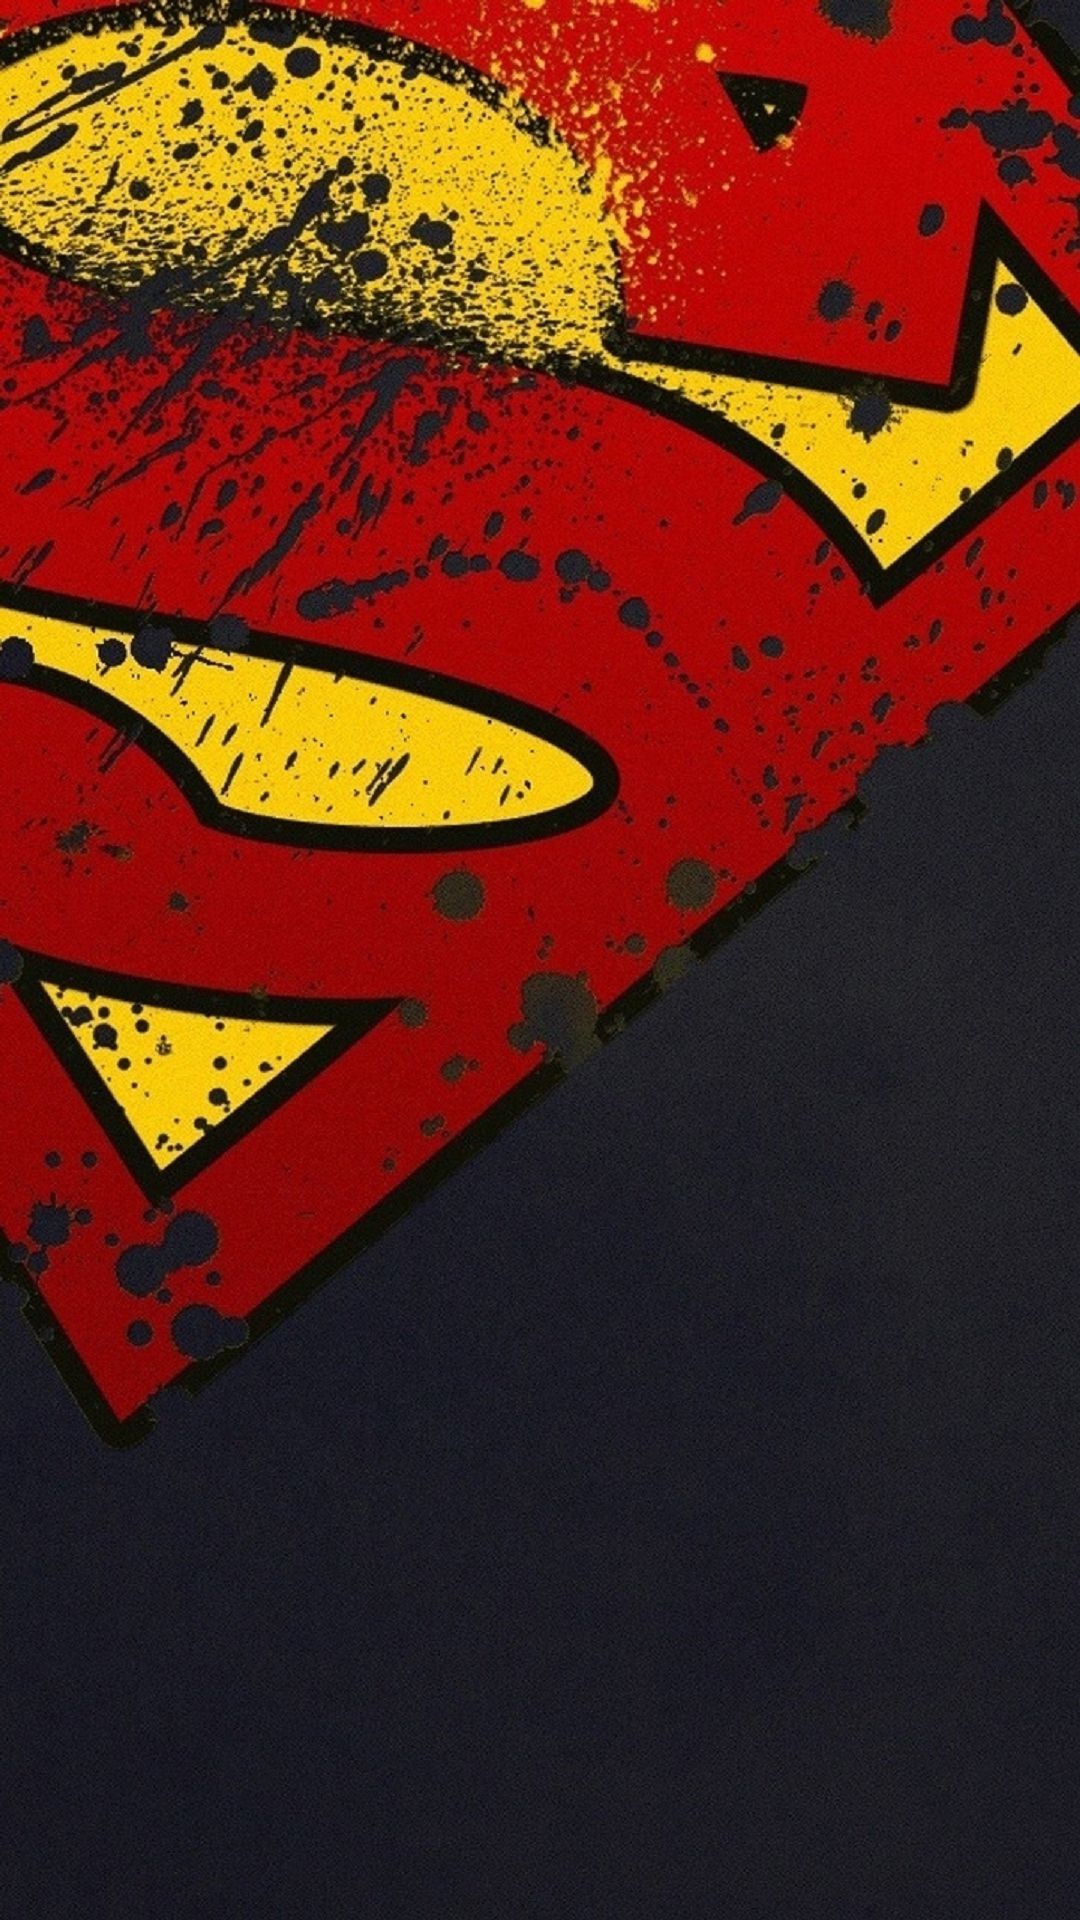 iPhone Superman Wallpaper Image